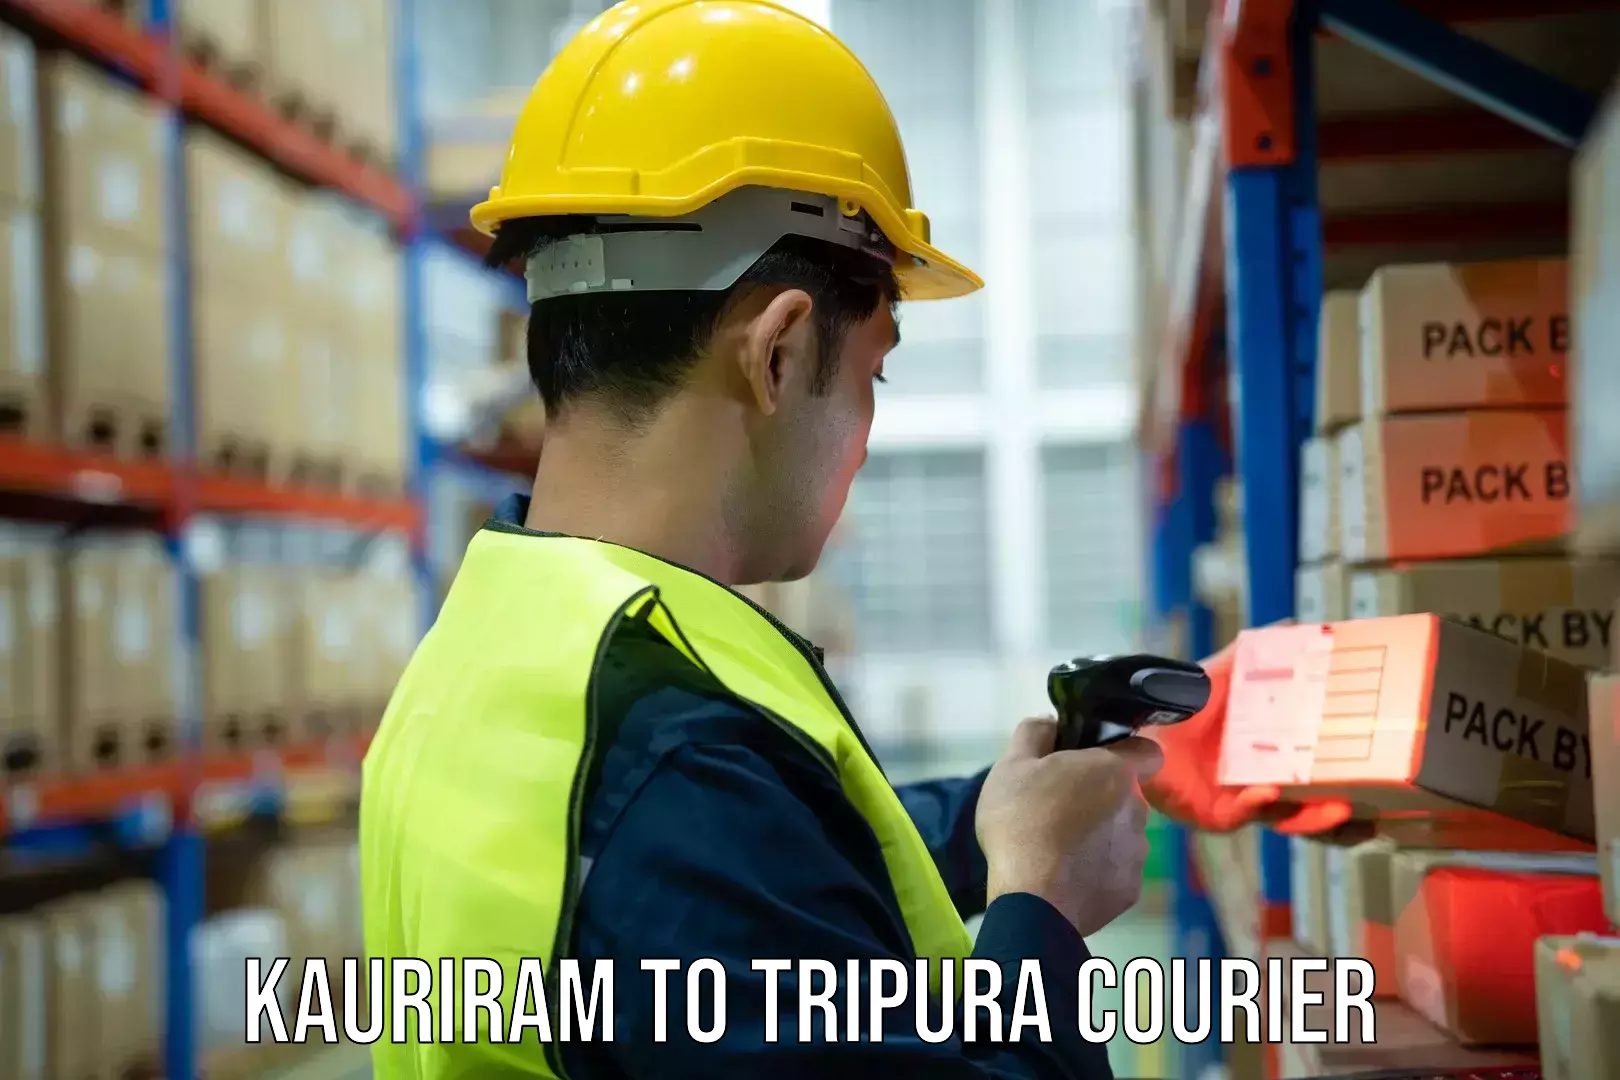 Courier service booking Kauriram to Tripura